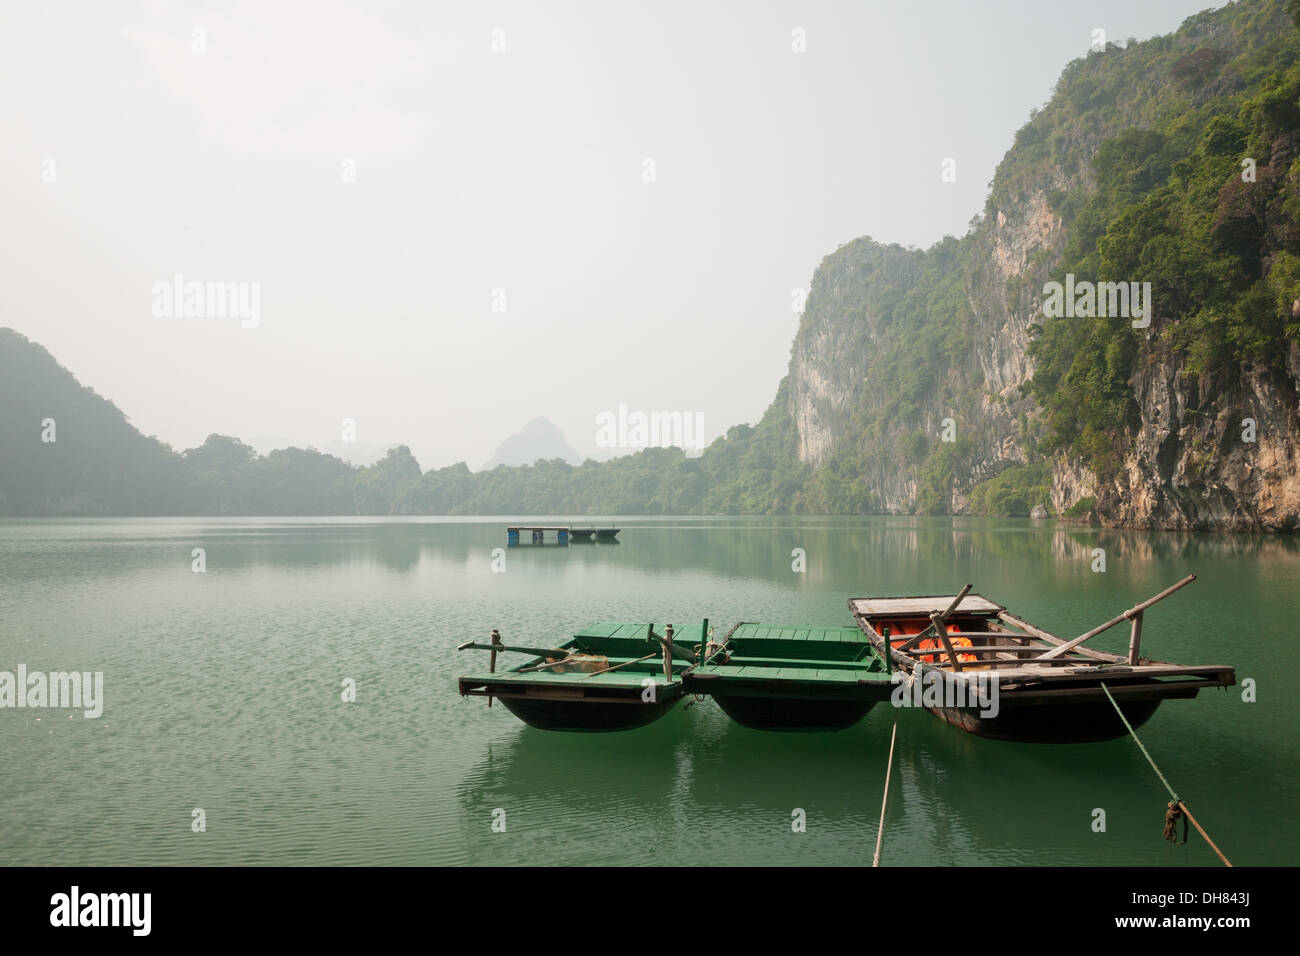 A view of rowboats and karst limestone rock formations characteristic of Lan Ha Bay in Halong Bay, Vietnam. Stock Photo